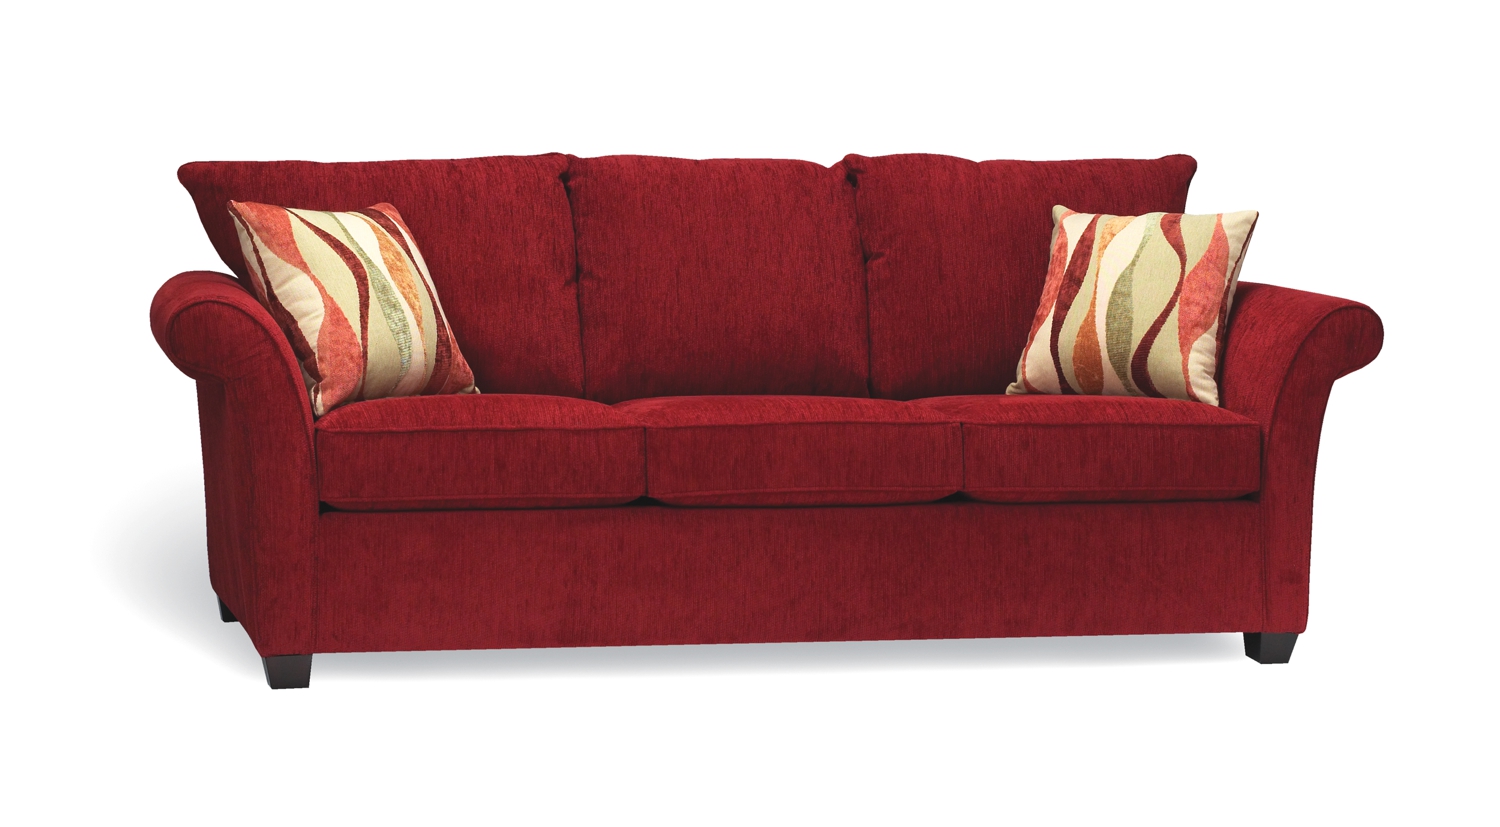 Tofino Stylish Sofa made in BC